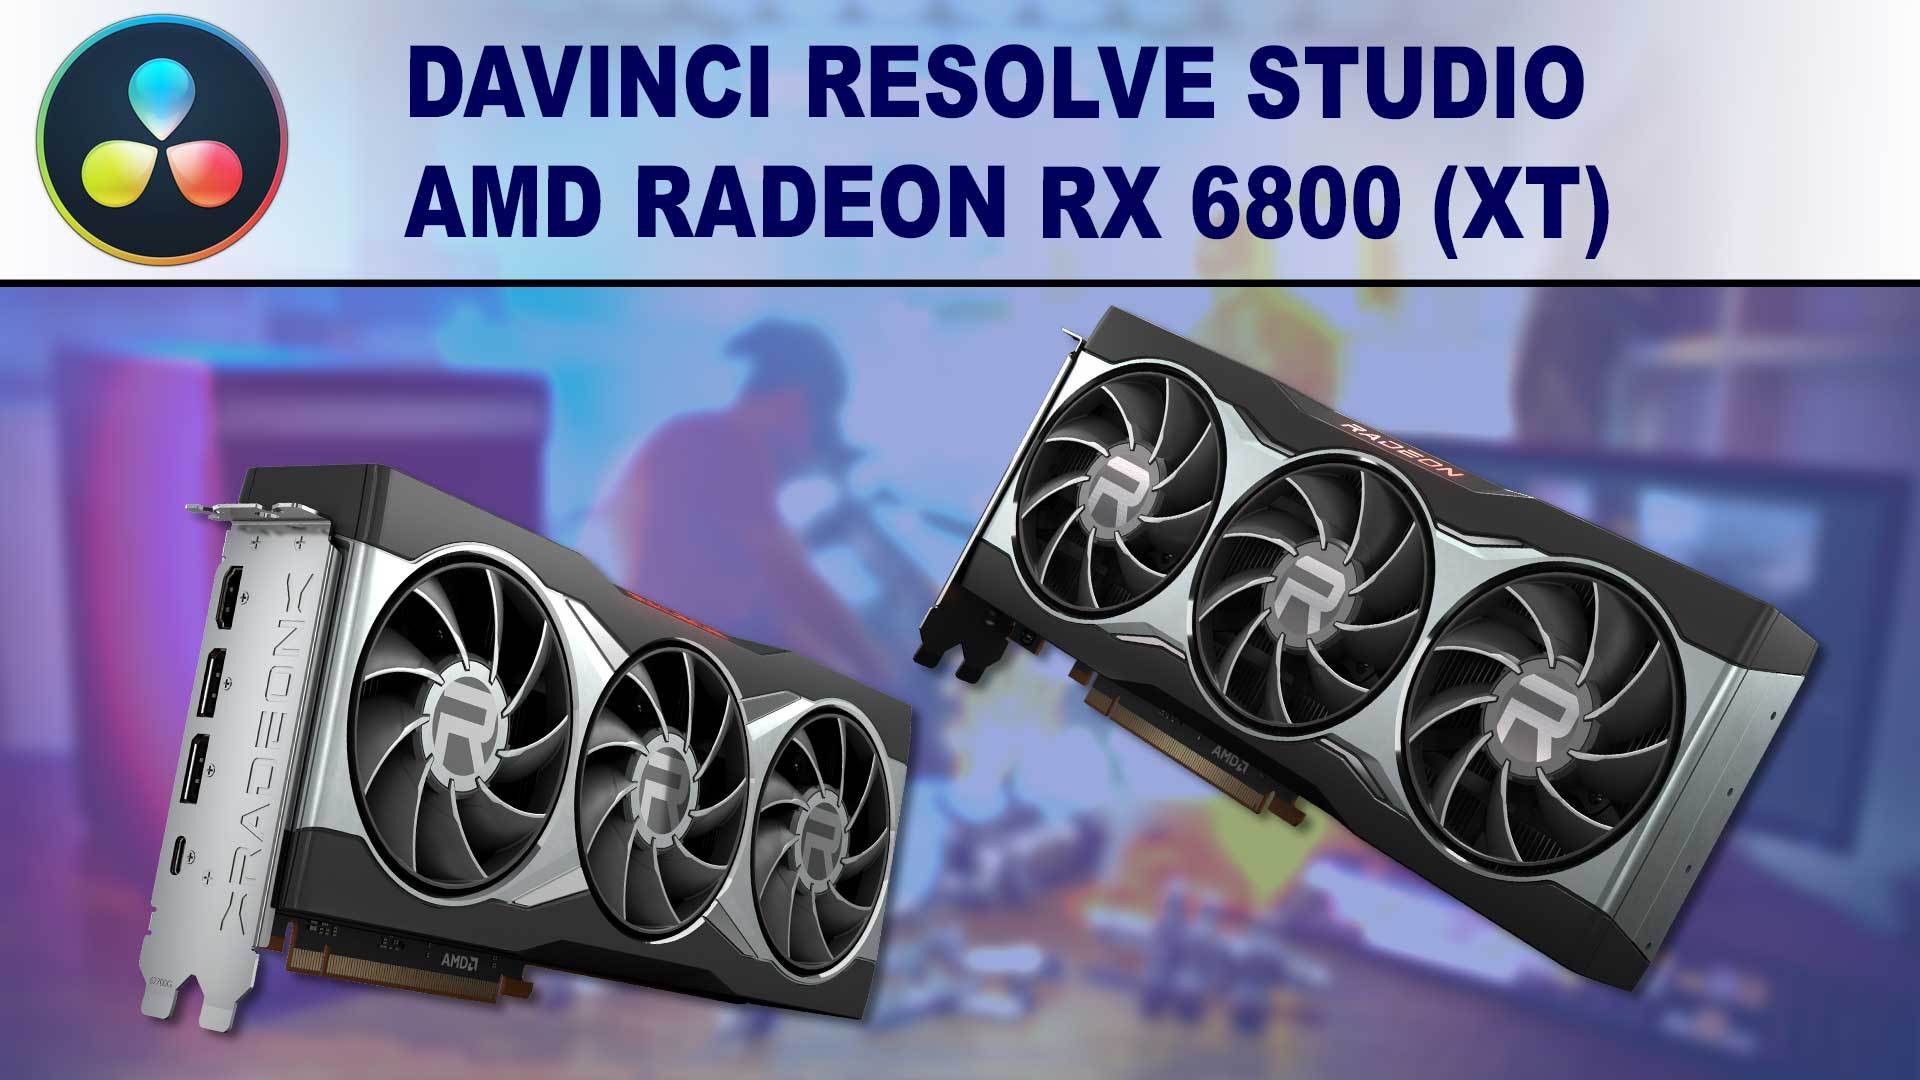 AMD Radeon RX 7800 XT GPU Review & Benchmarks vs. RX 6800 XT, RTX